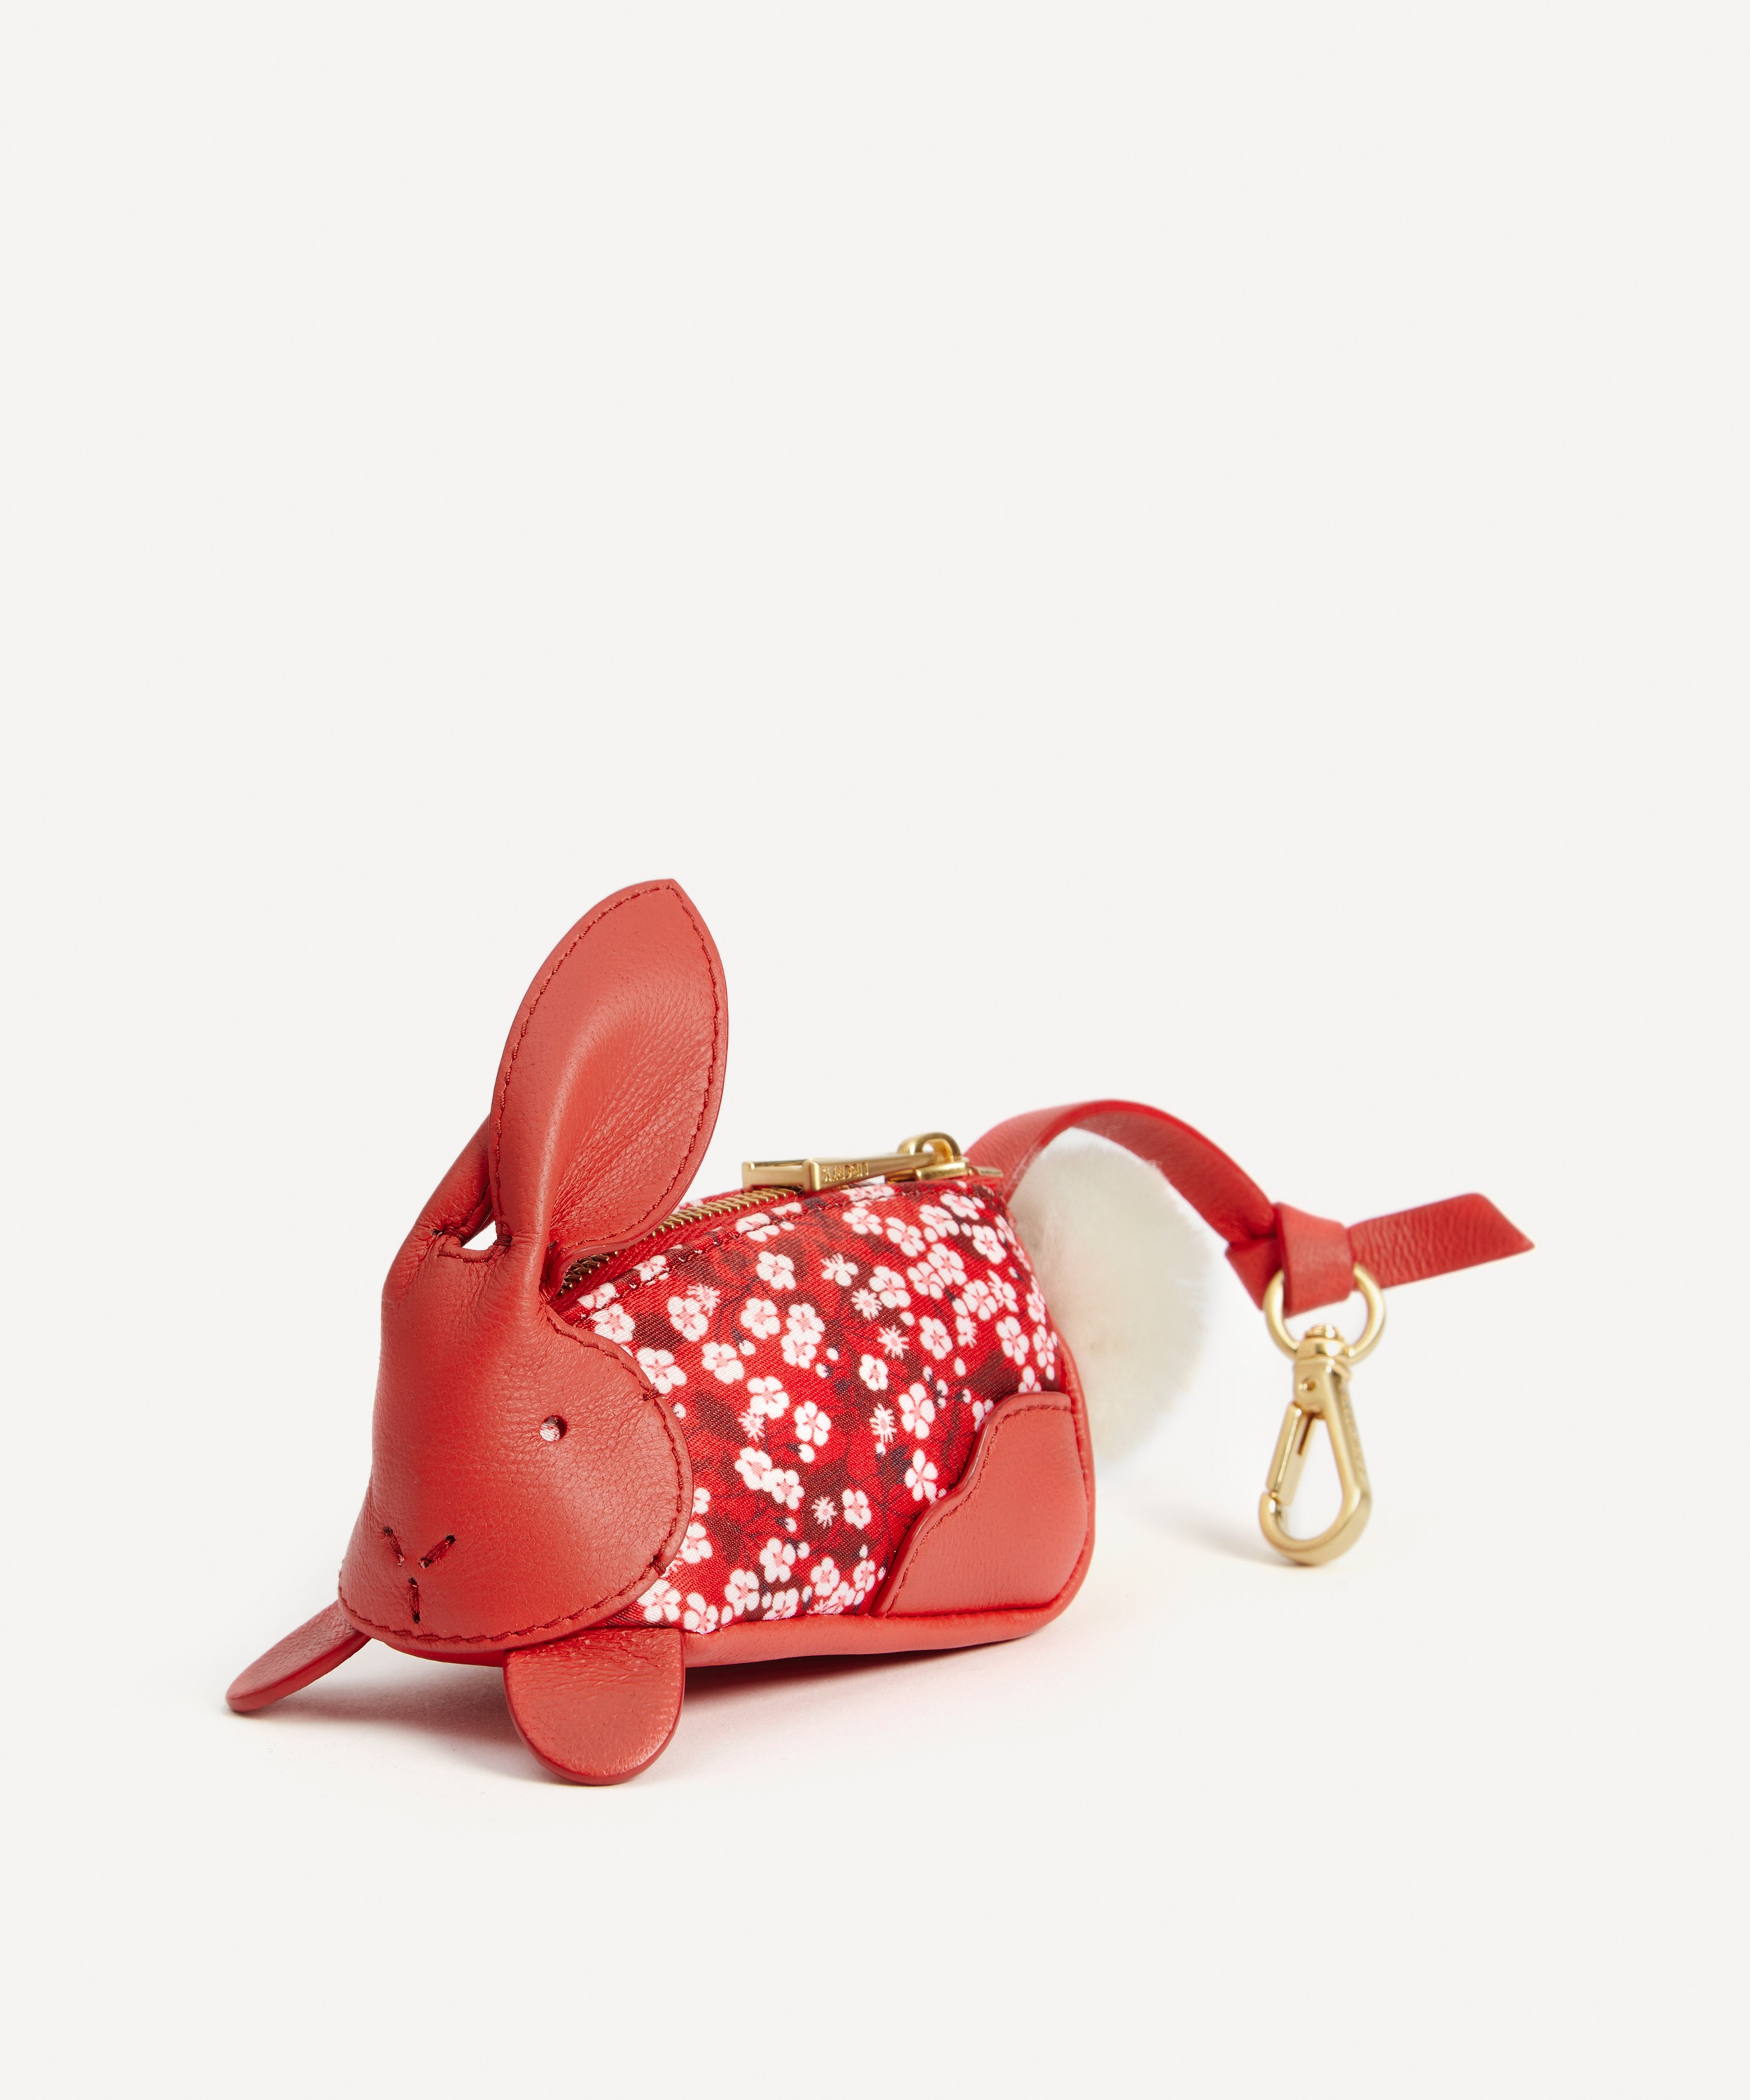 Free Shipping Luxury Pink Mouse Ears Handbag Purse Charm Keychain Women's  Classic Fashion Gift